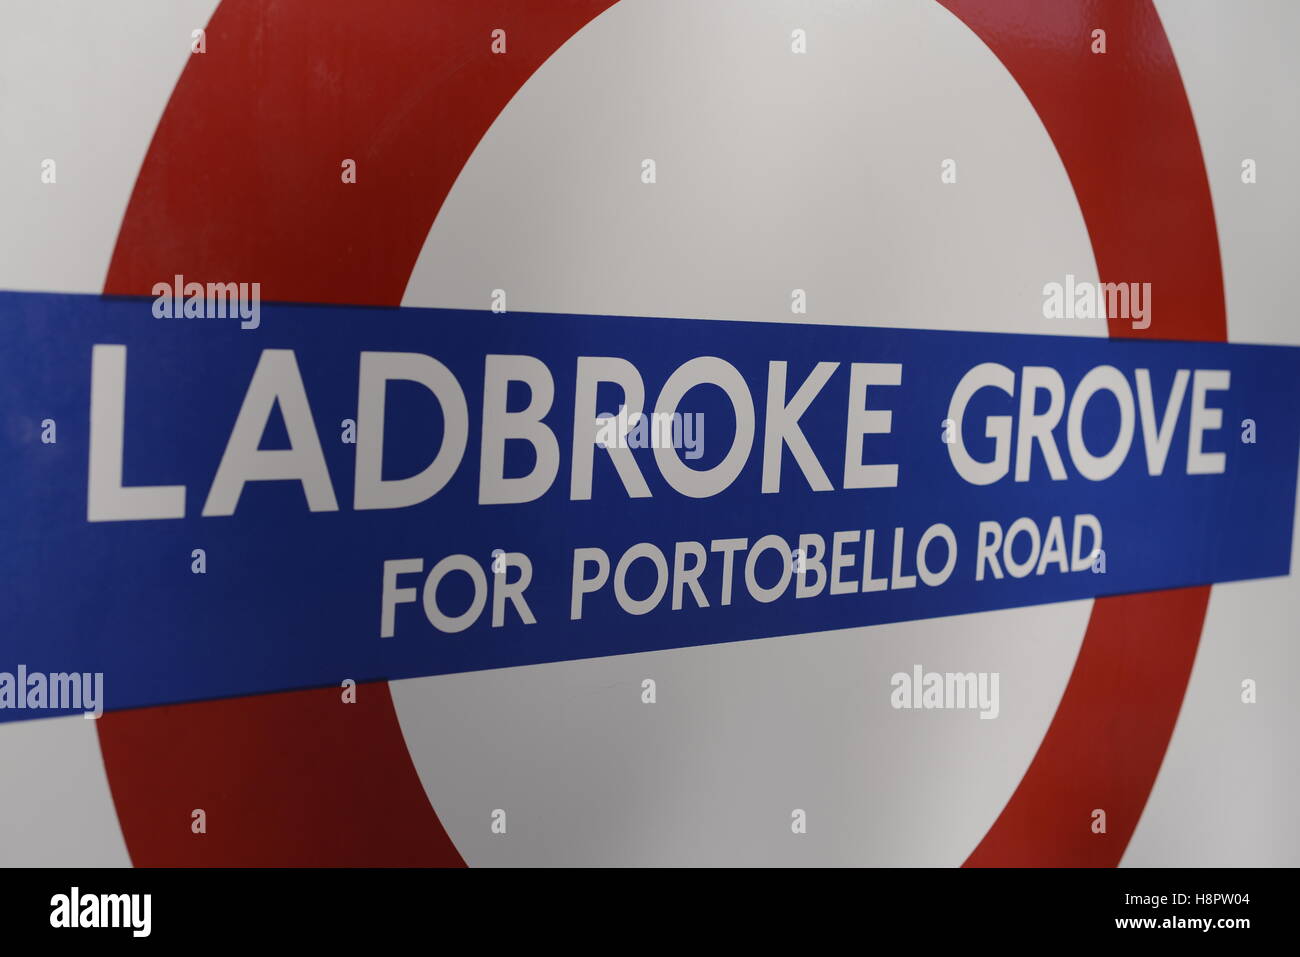 Portobello road de Ladbroke Grove, London Underground sign Banque D'Images